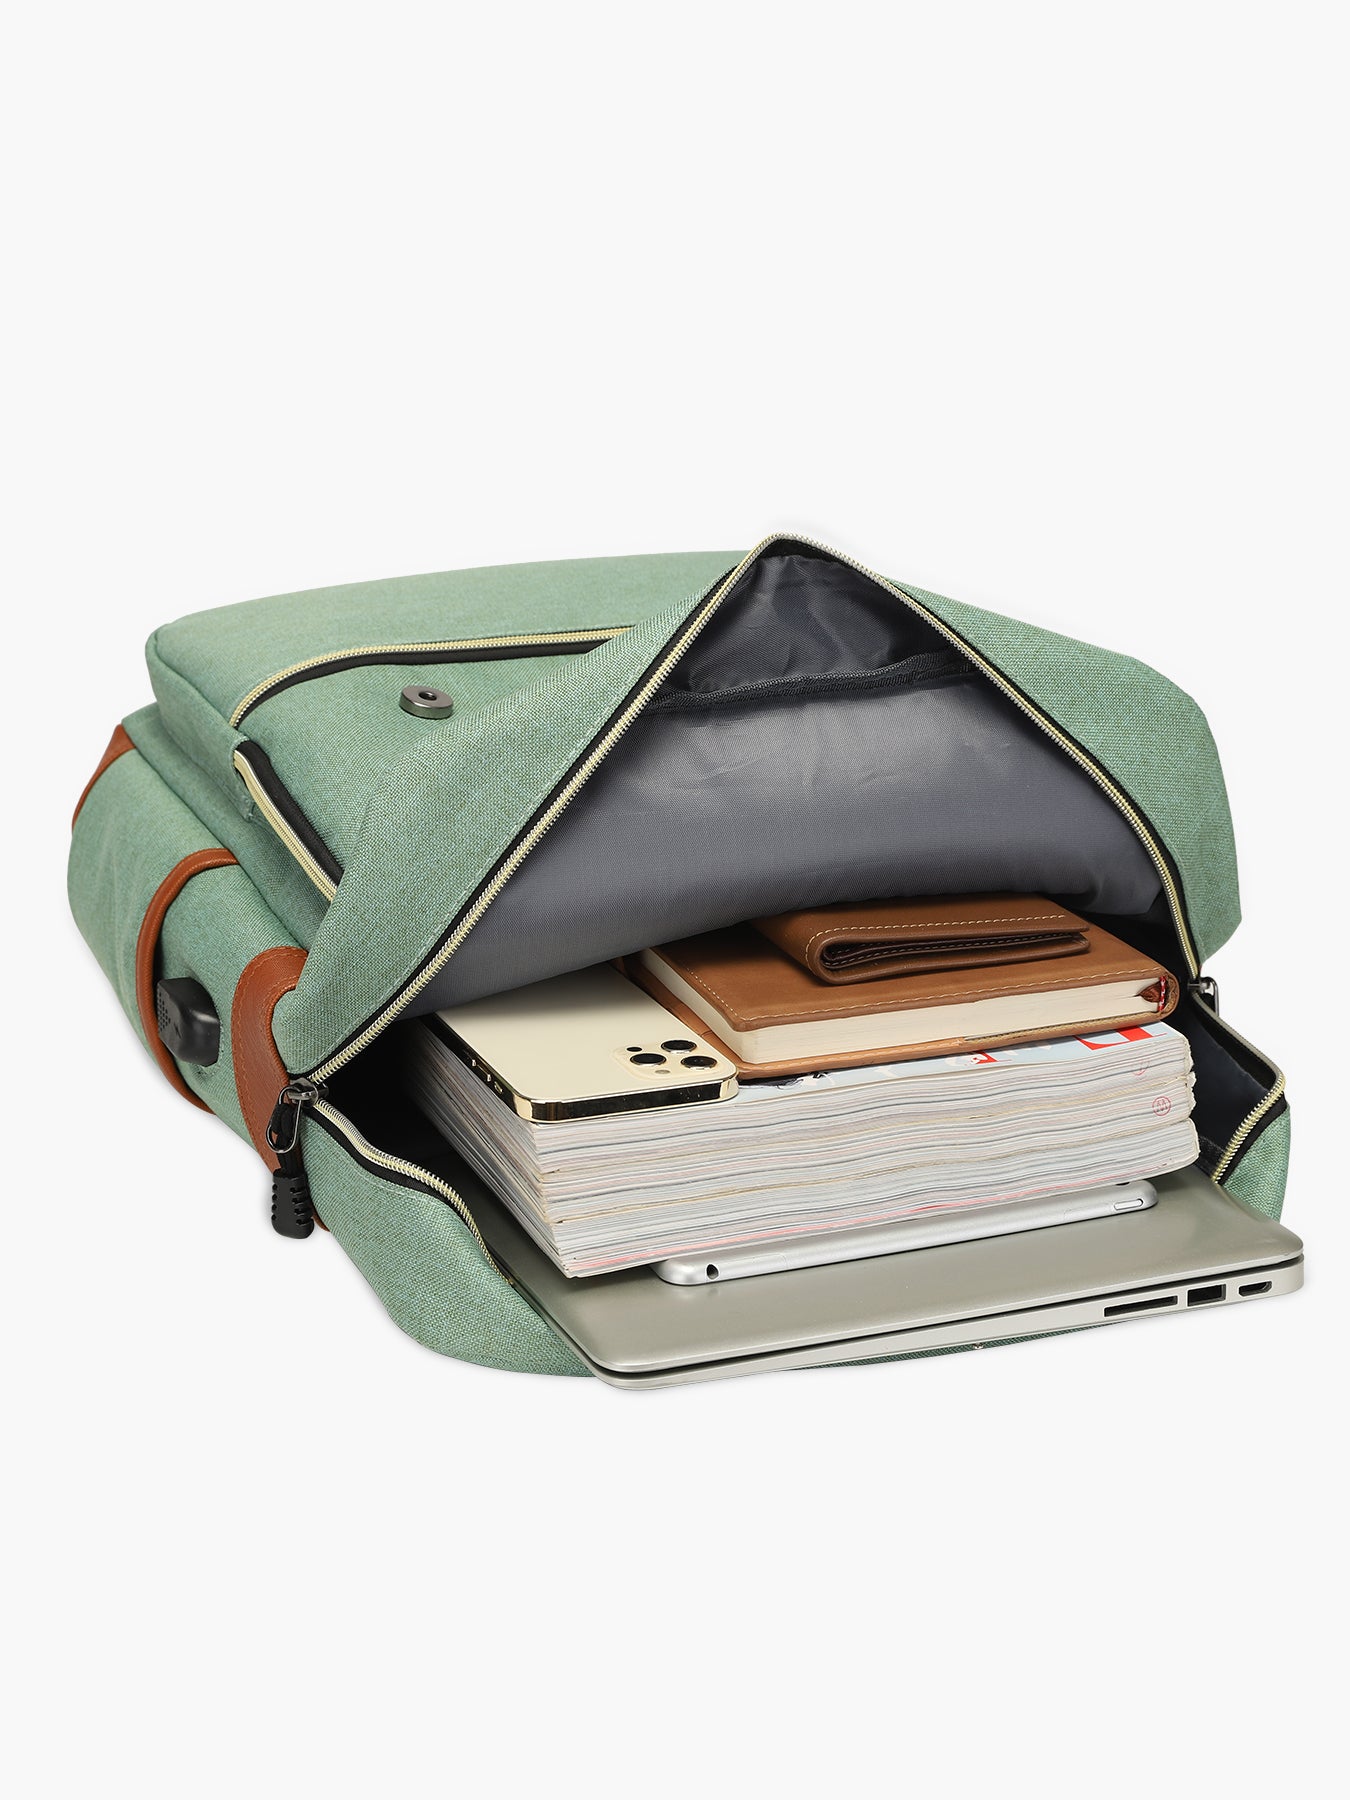 MODOKER Vintage Laptop Backpack for Women Men- Green Travel Backpack